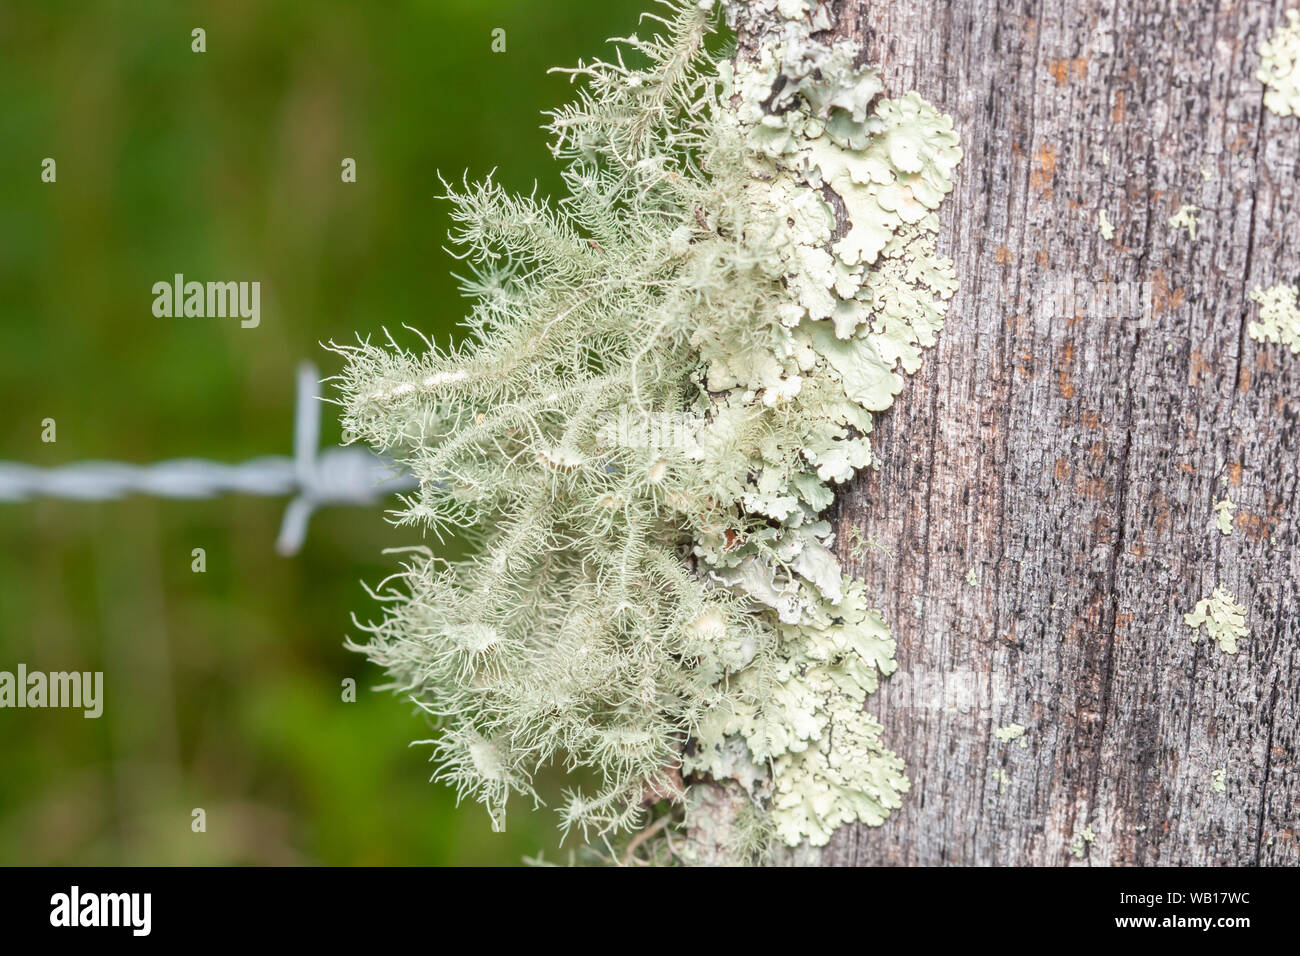 Bushy Beard Lichen (Usnea strigosa) growing on the side of a wooden fence post. Stock Photo